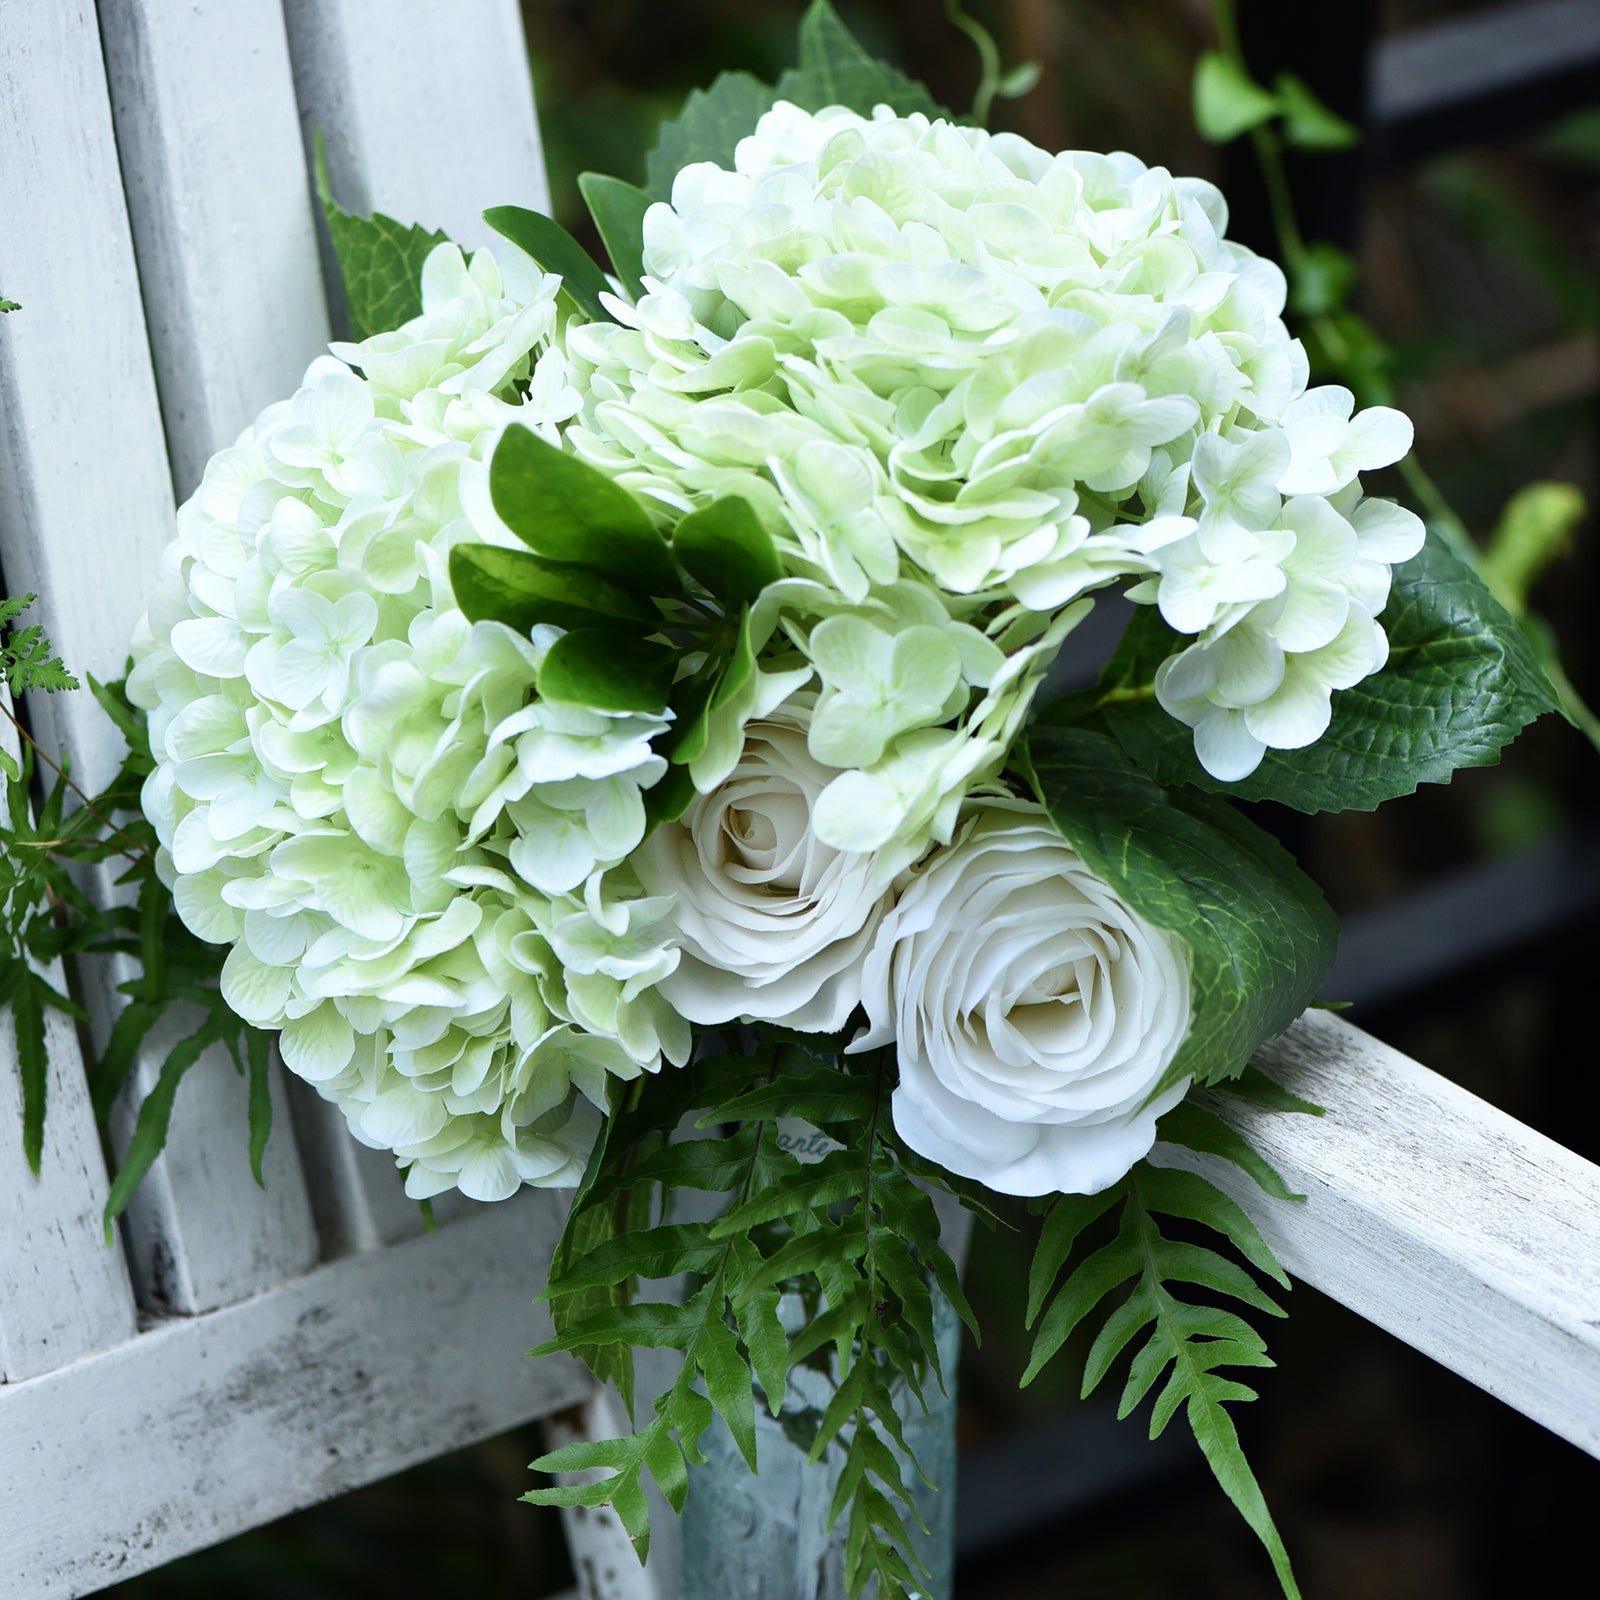 FiveSeasonStuff 2 Stems Real Touch Petals and Leaves Artificial Hydrangea Flowers Long Stem Floral Arrangement | for Wedding Bridal Party Home Décor DIY Floral Decoration (Pale Green)